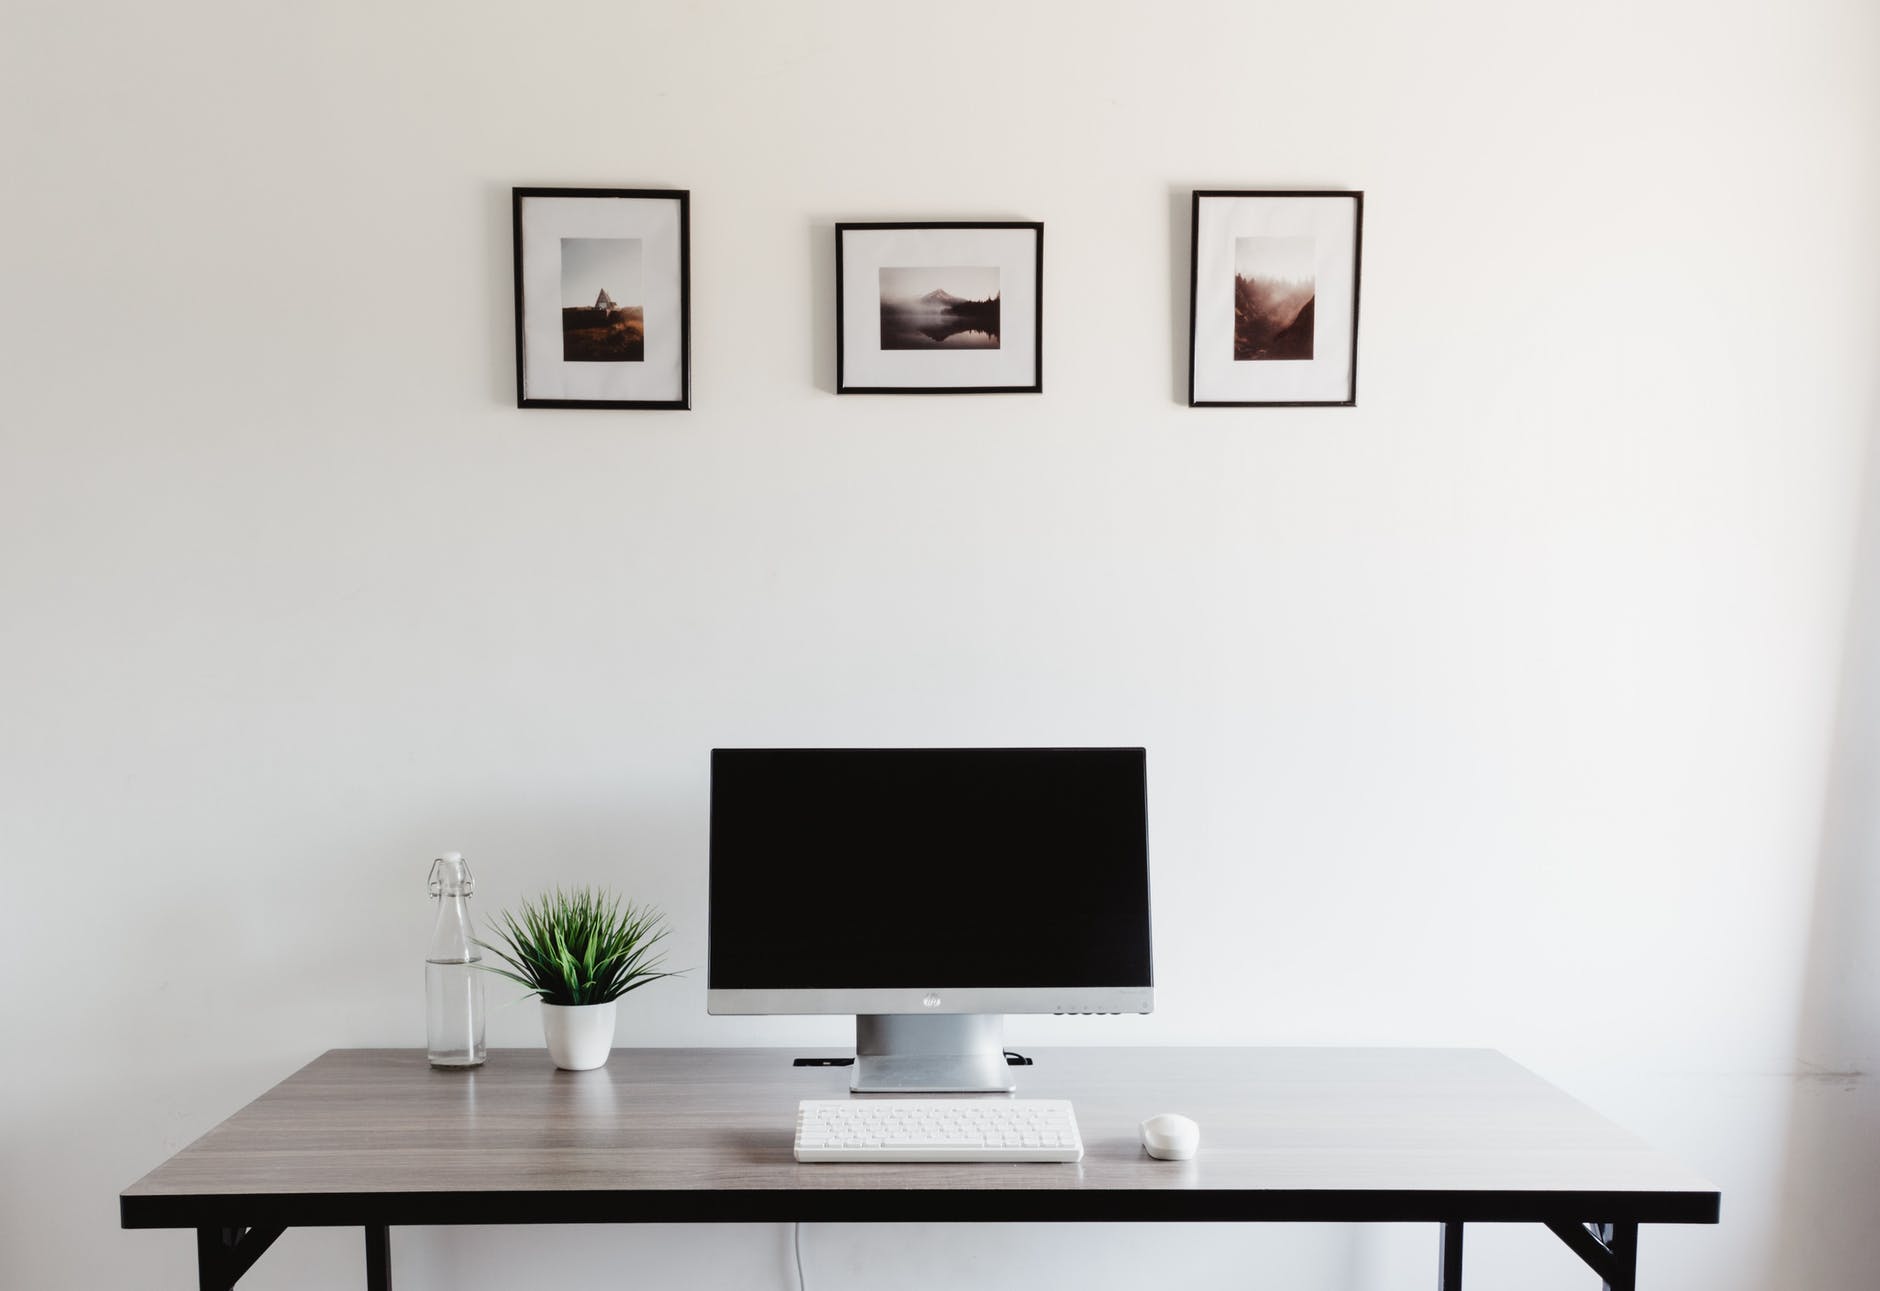 a minimalist workspace